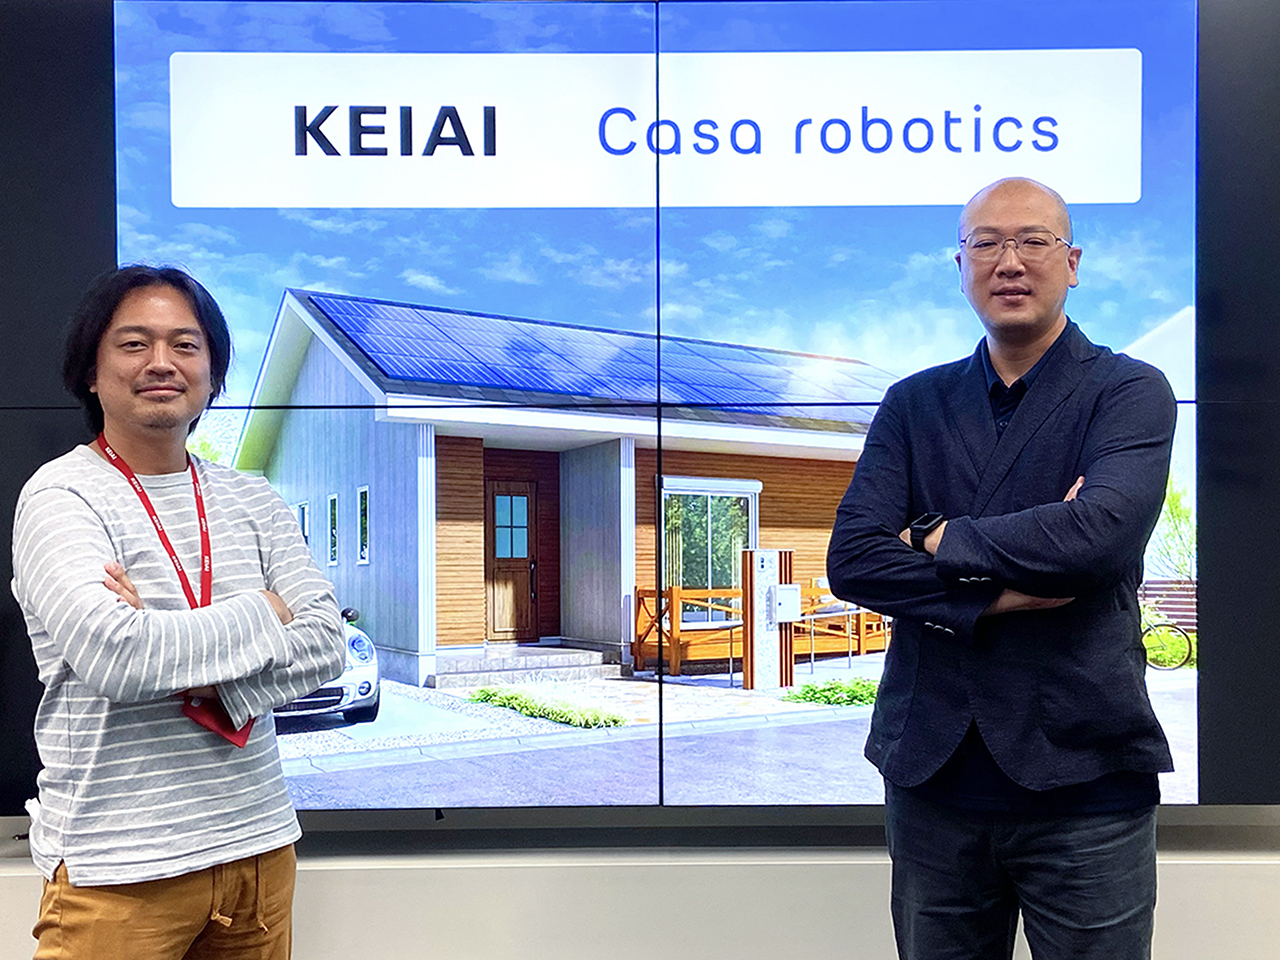 Casa robotics 代表取締役の細谷竜一氏（右）とケイアイスター不動産 デジタルサービス企画部部長の松山一則氏（左）